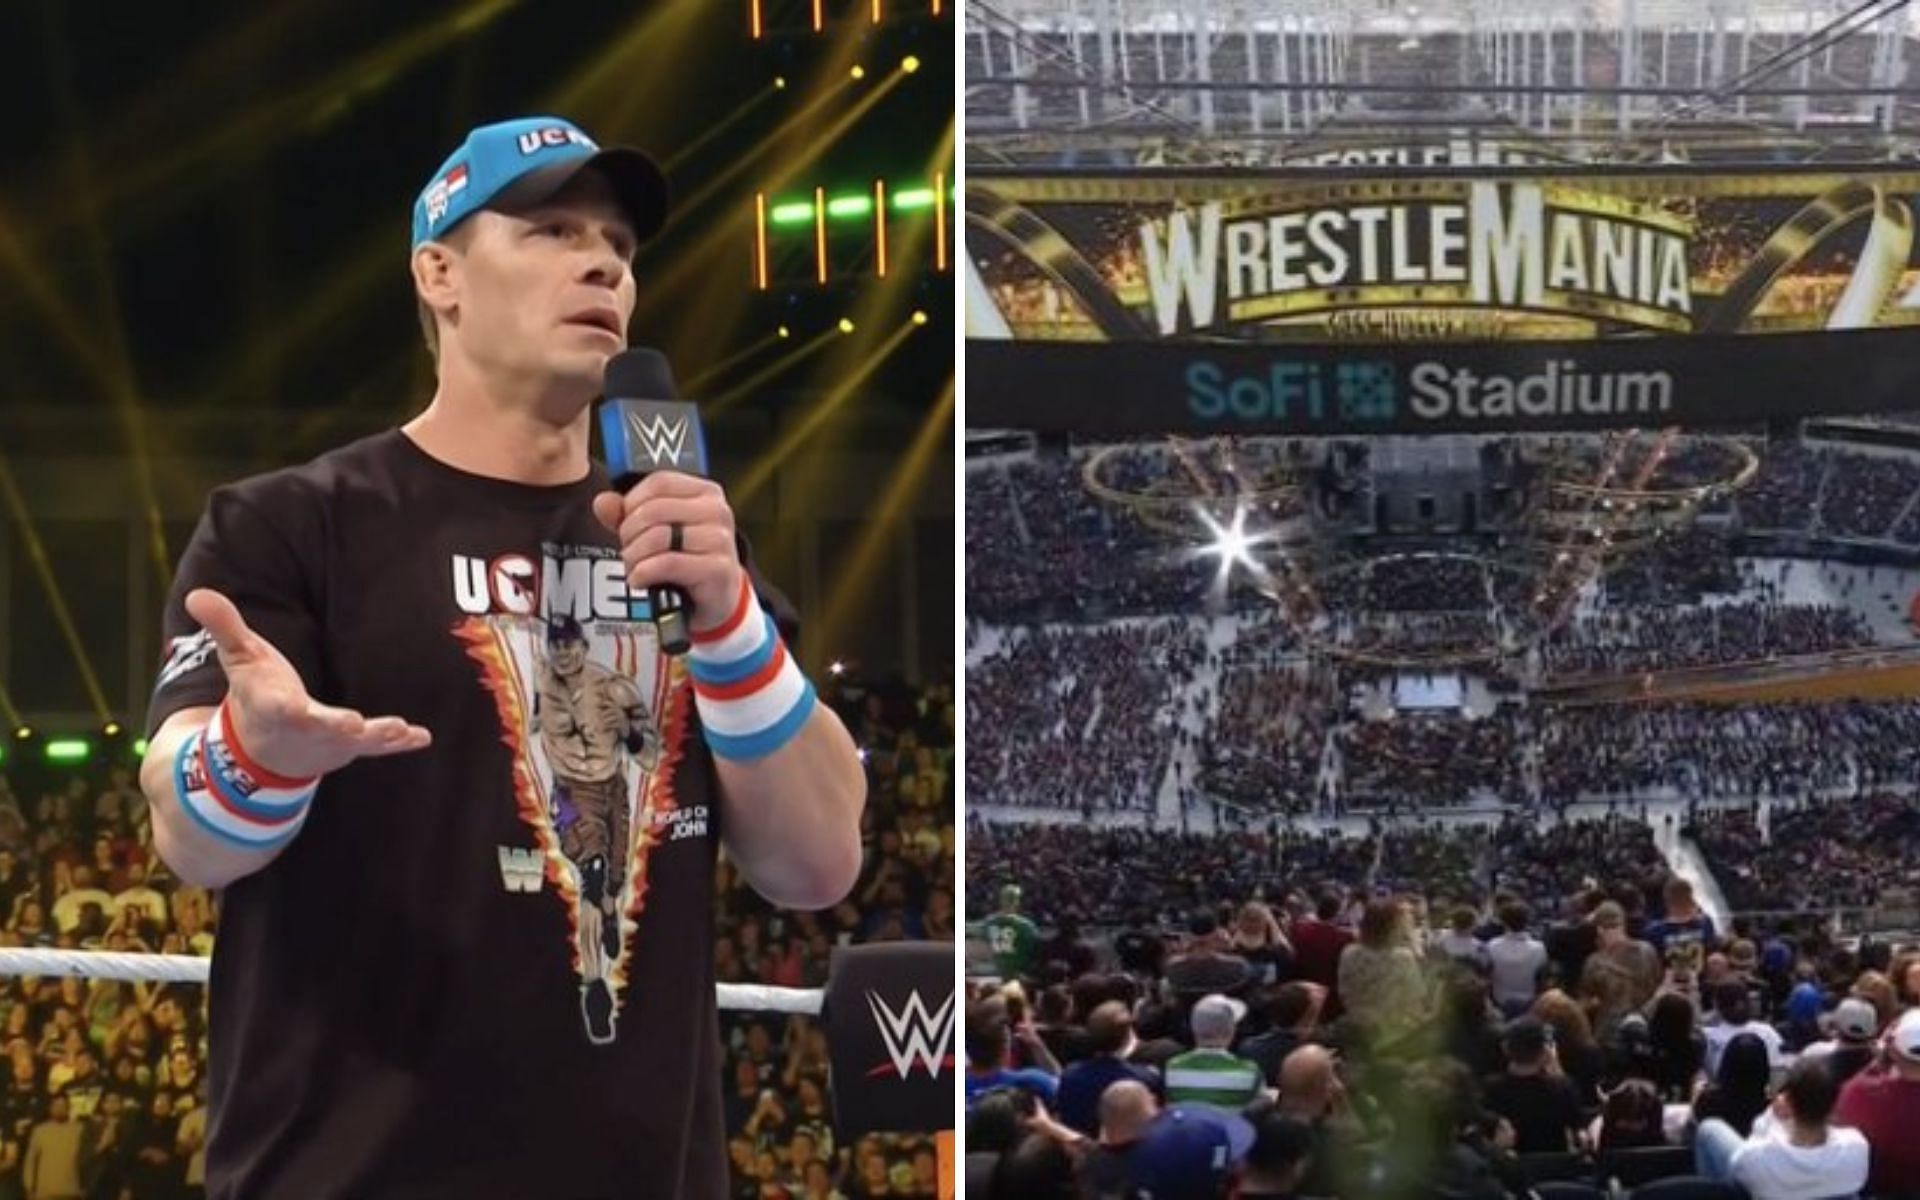 The WWE legend made a ground-breaking announcement regarding WrestleMania